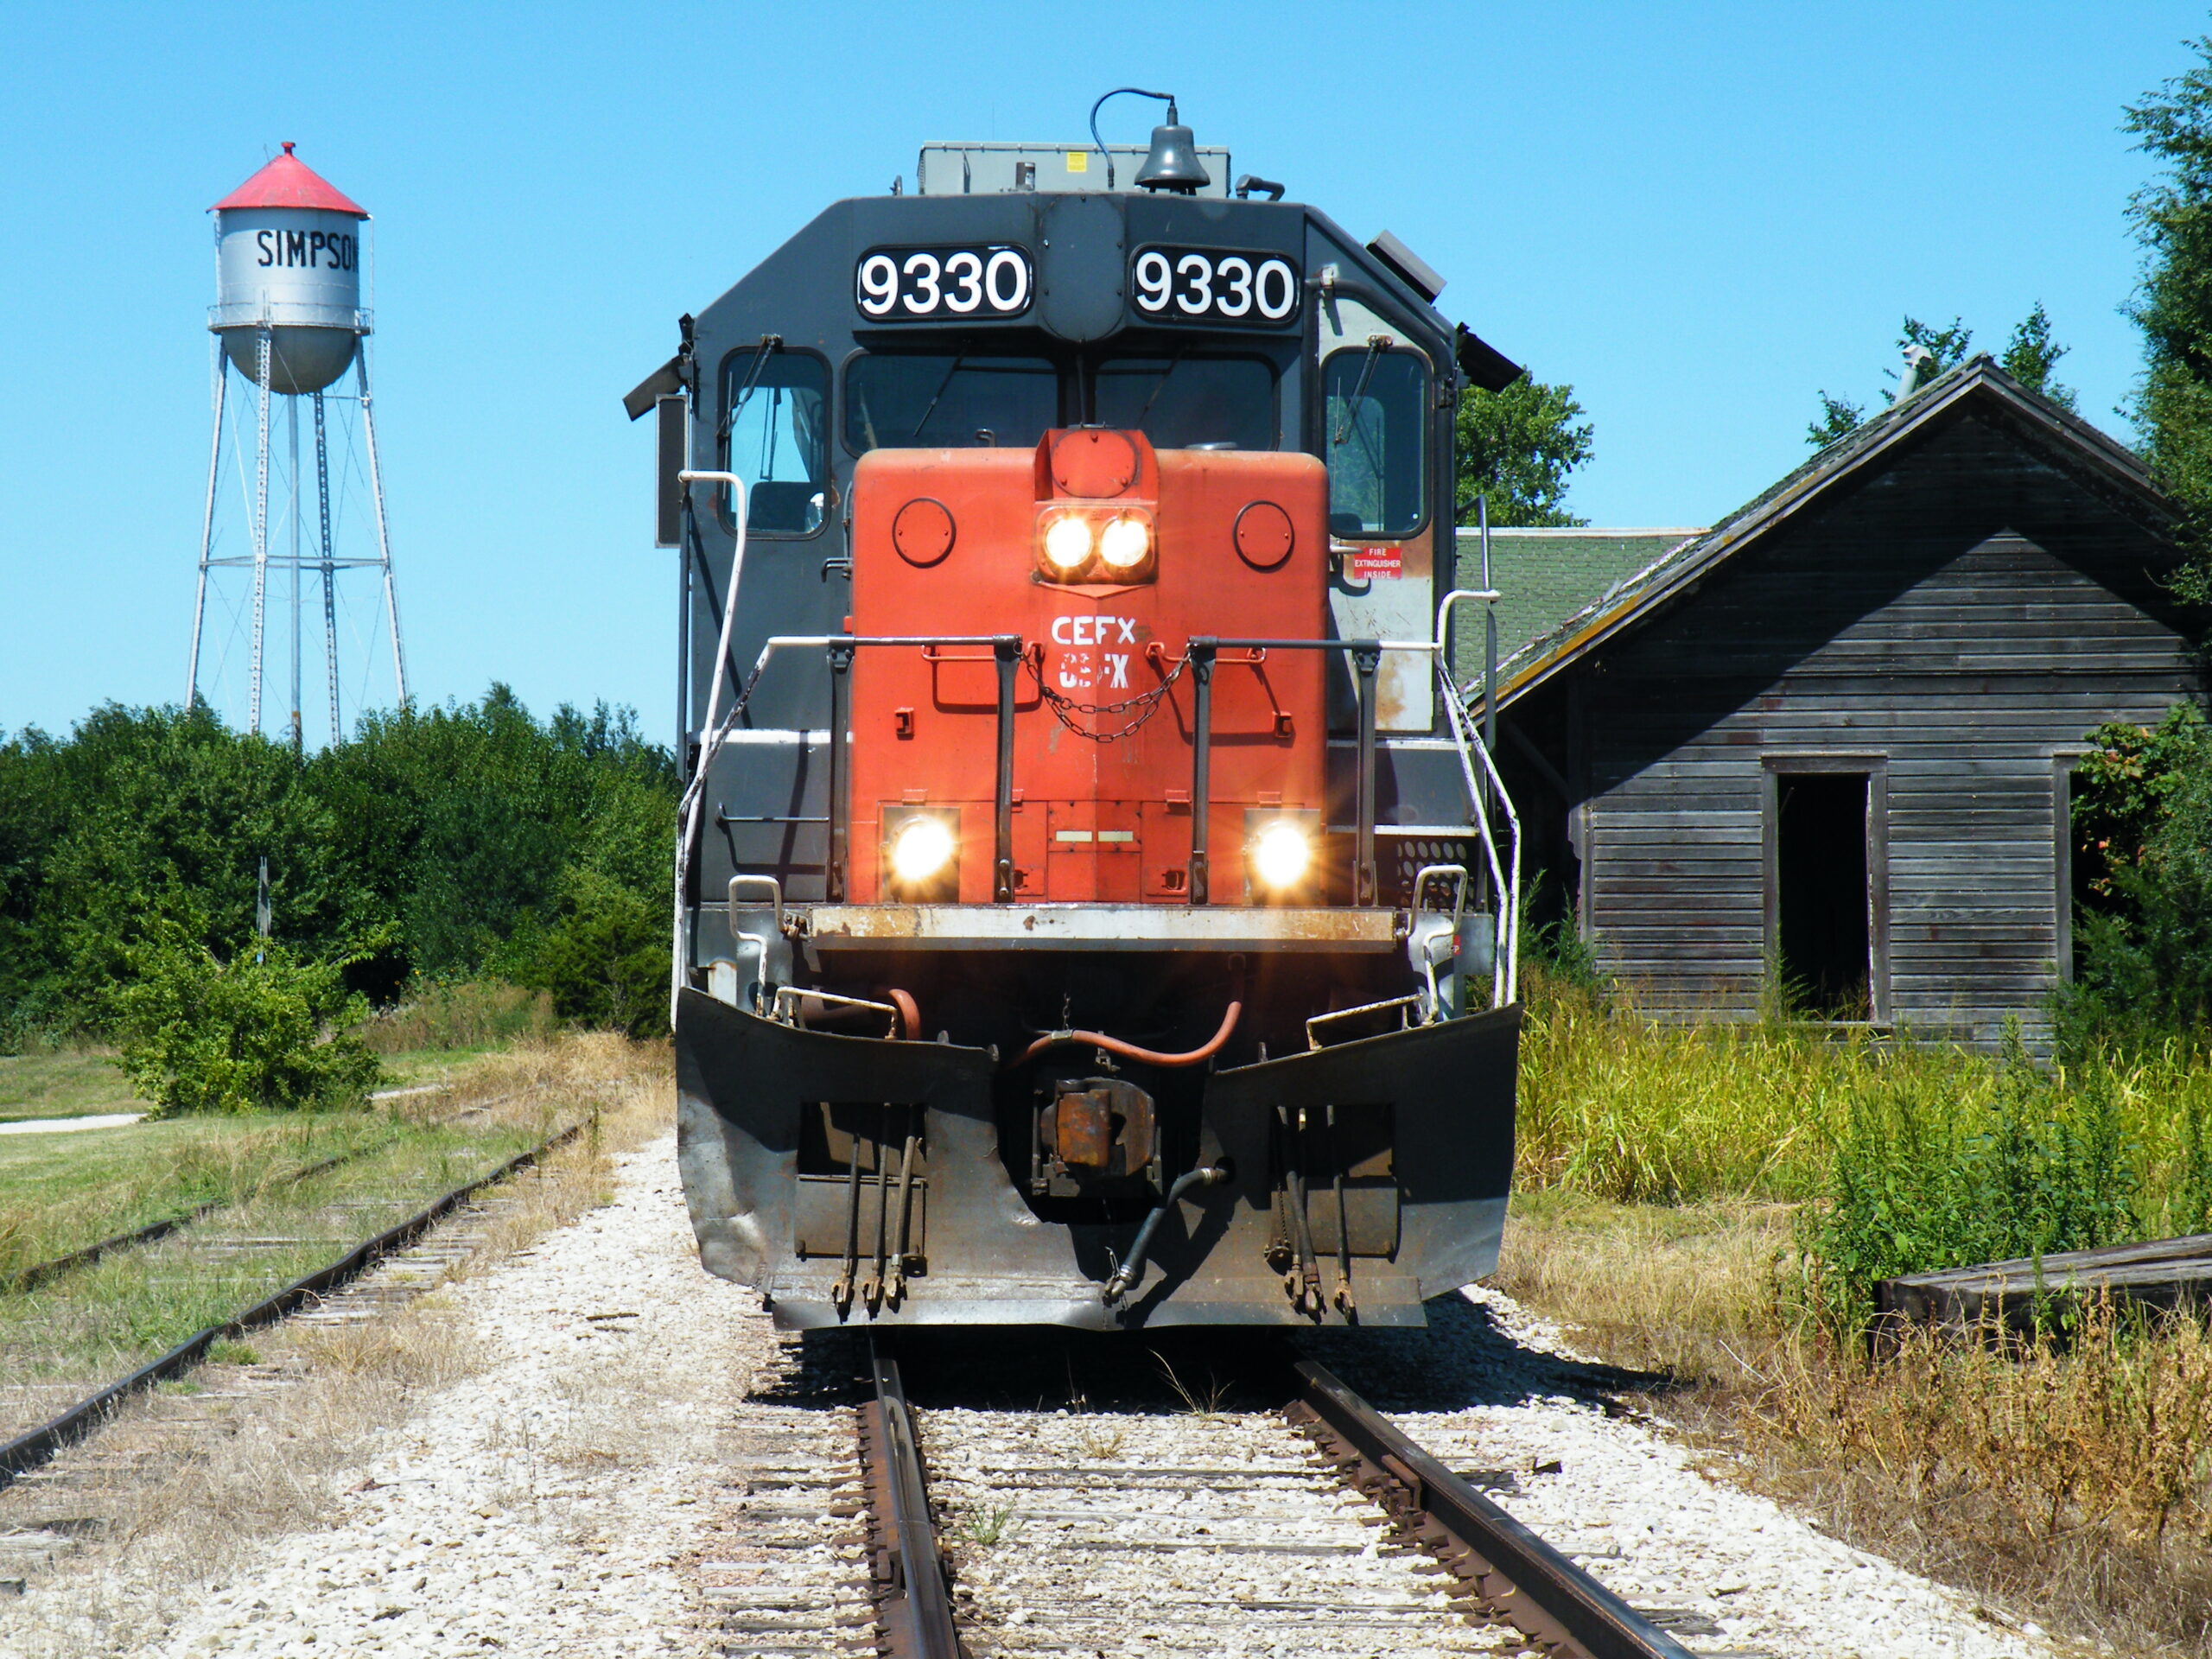 Train At Simpson, Kansas Photo By The GYPSY